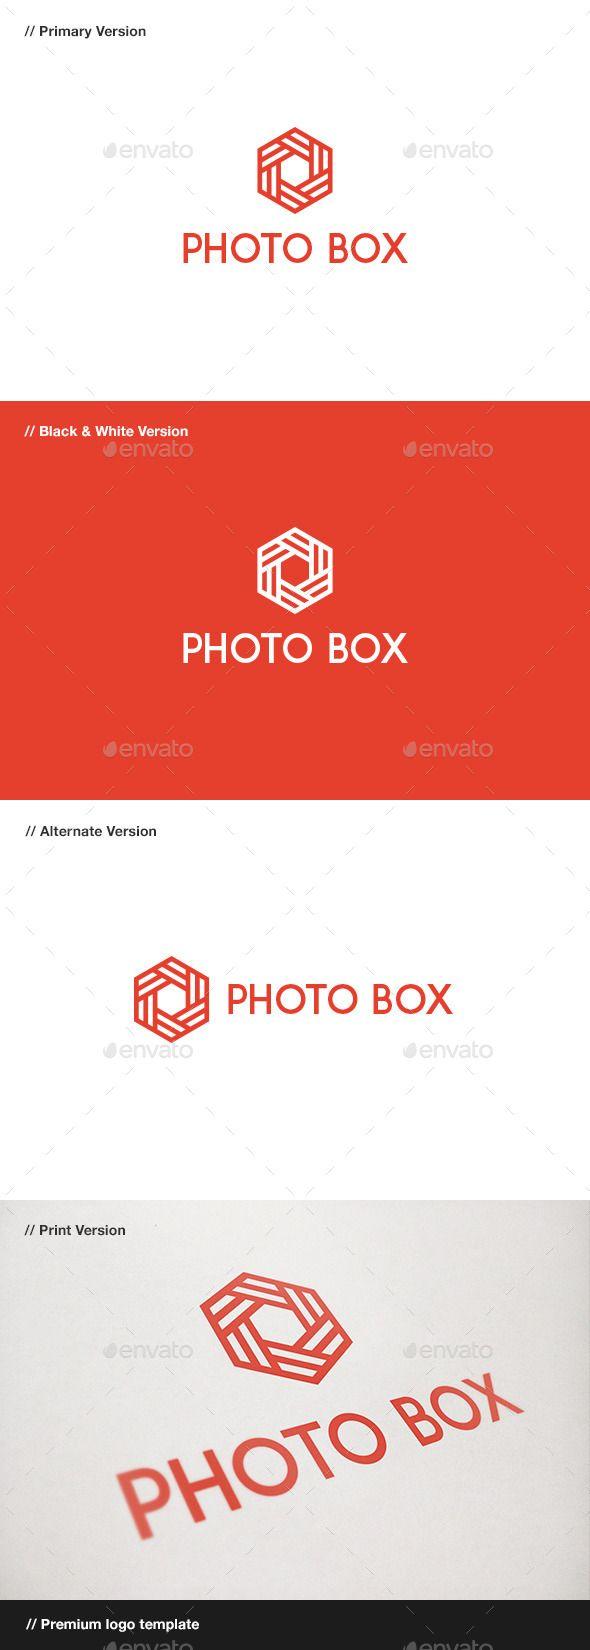 Red Hexagon Sports Logo - Pin by Hiu Ngai on IDEAS Help | Logos, Photography logos, Logo templates